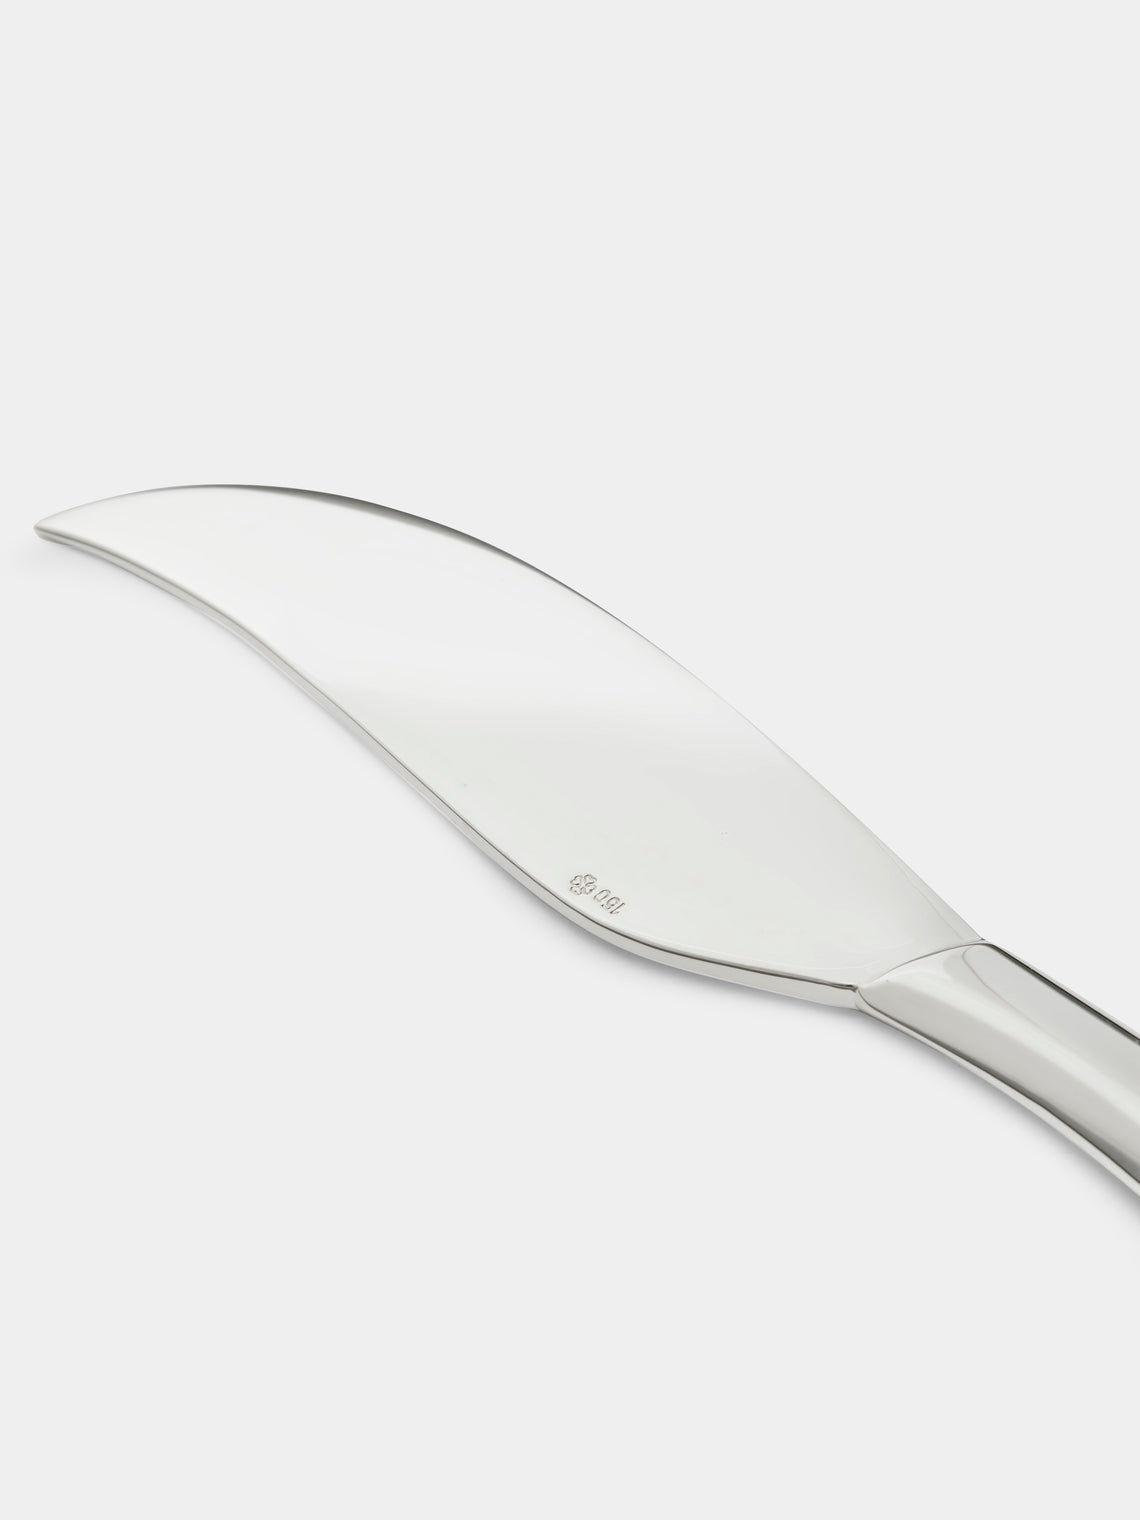 Wiener Silber Manufactur - Josef Hoffmann 135 Silver-Plated Fish Knife - Silver - ABASK